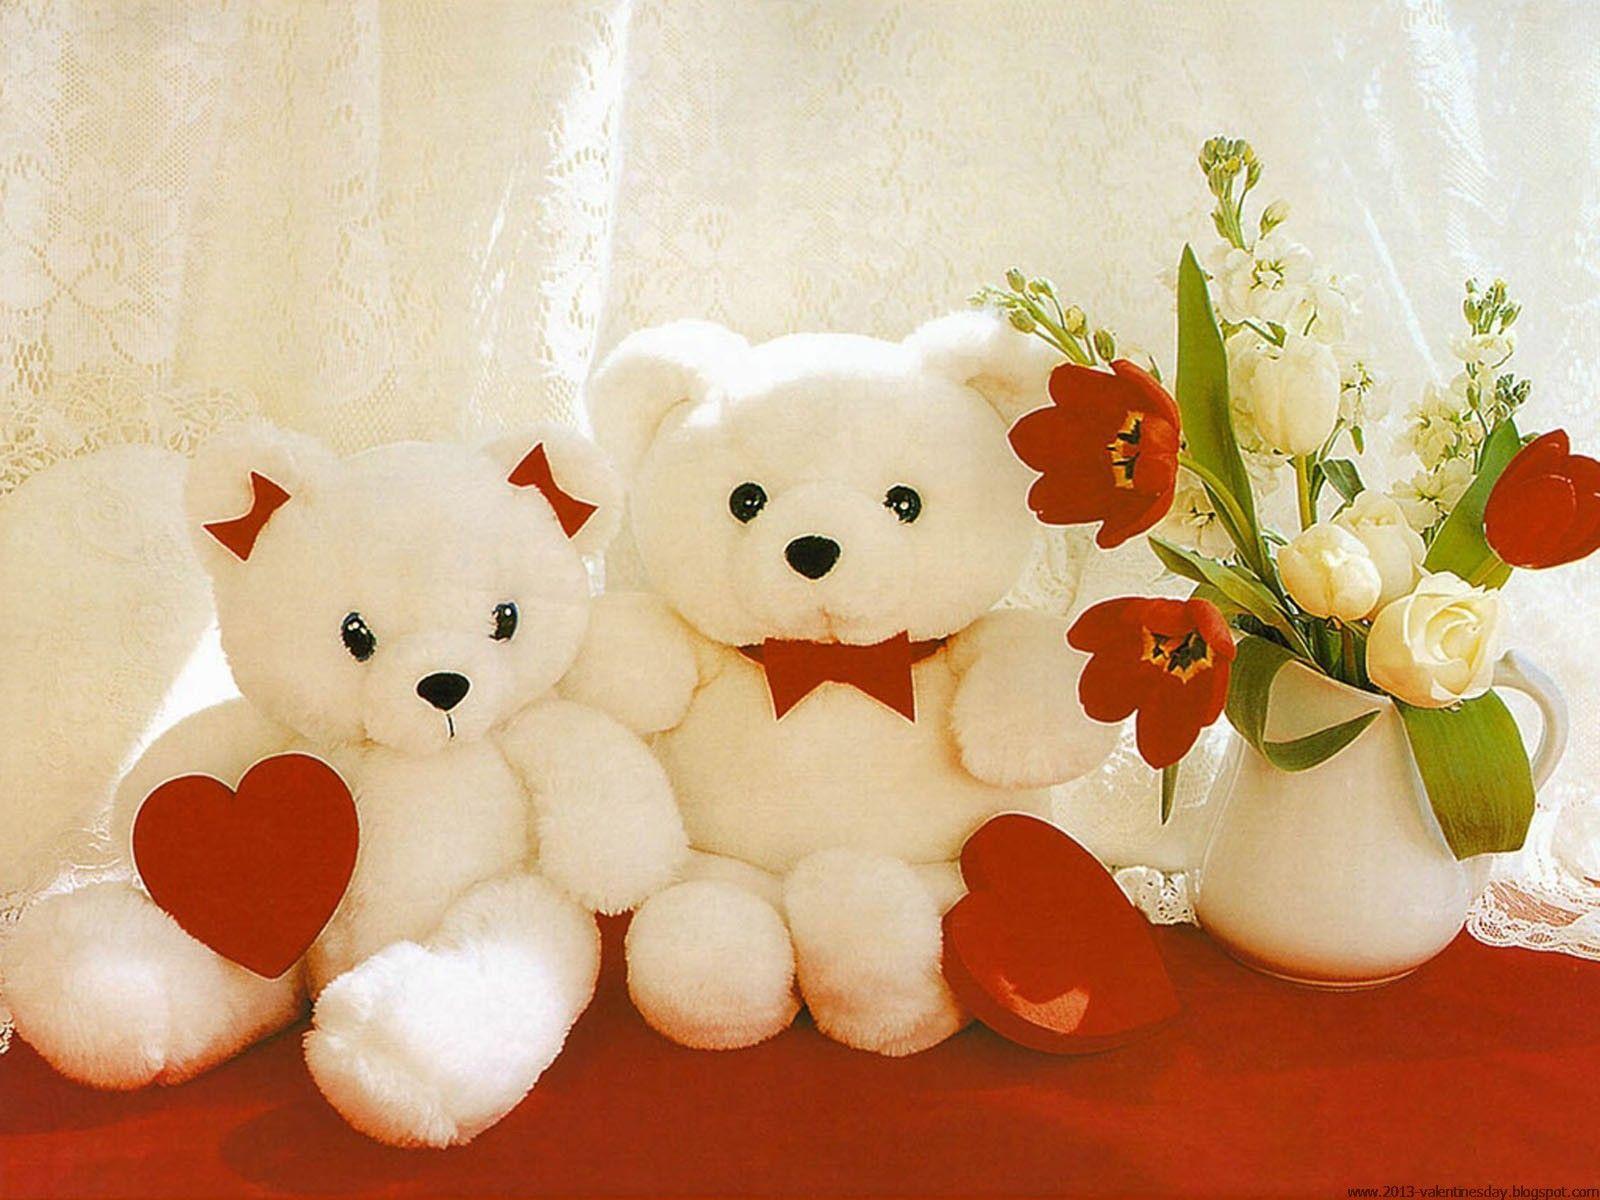 Cute Teddy Bear Wallpaper Love Wallpaper. LoveWallpaperHD